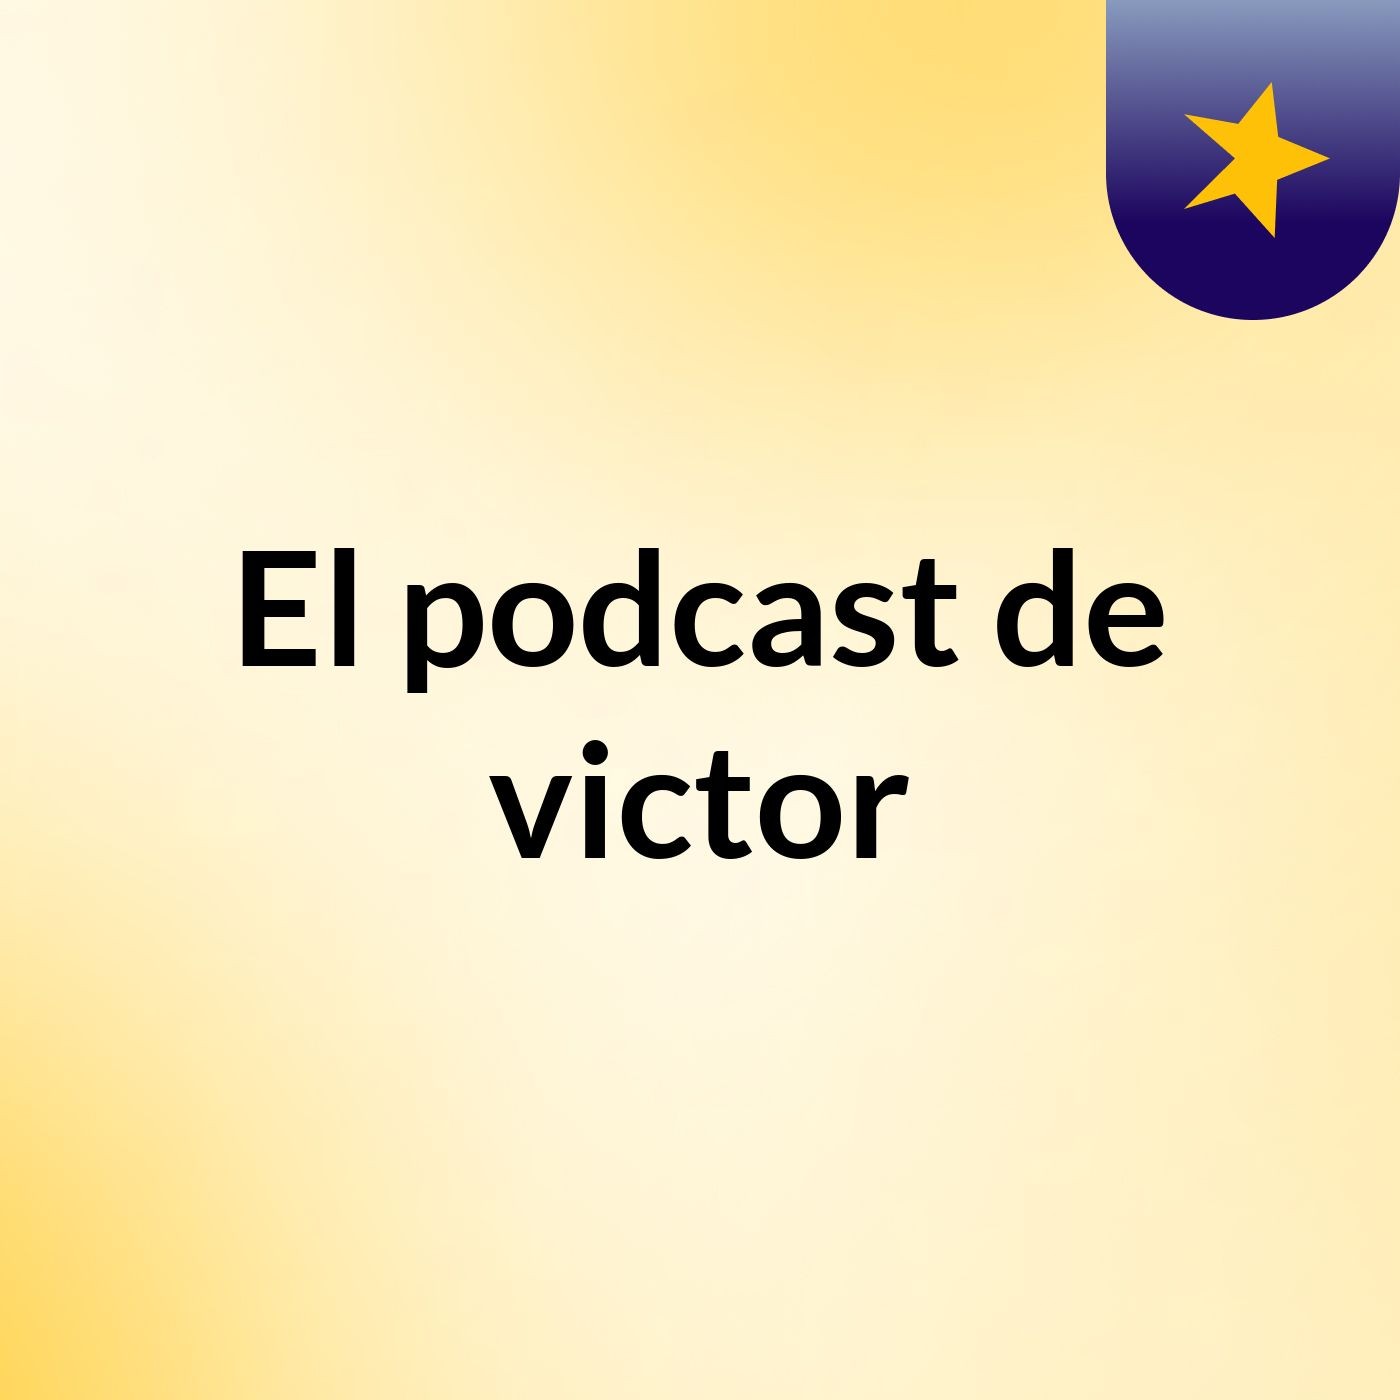 El podcast de victor